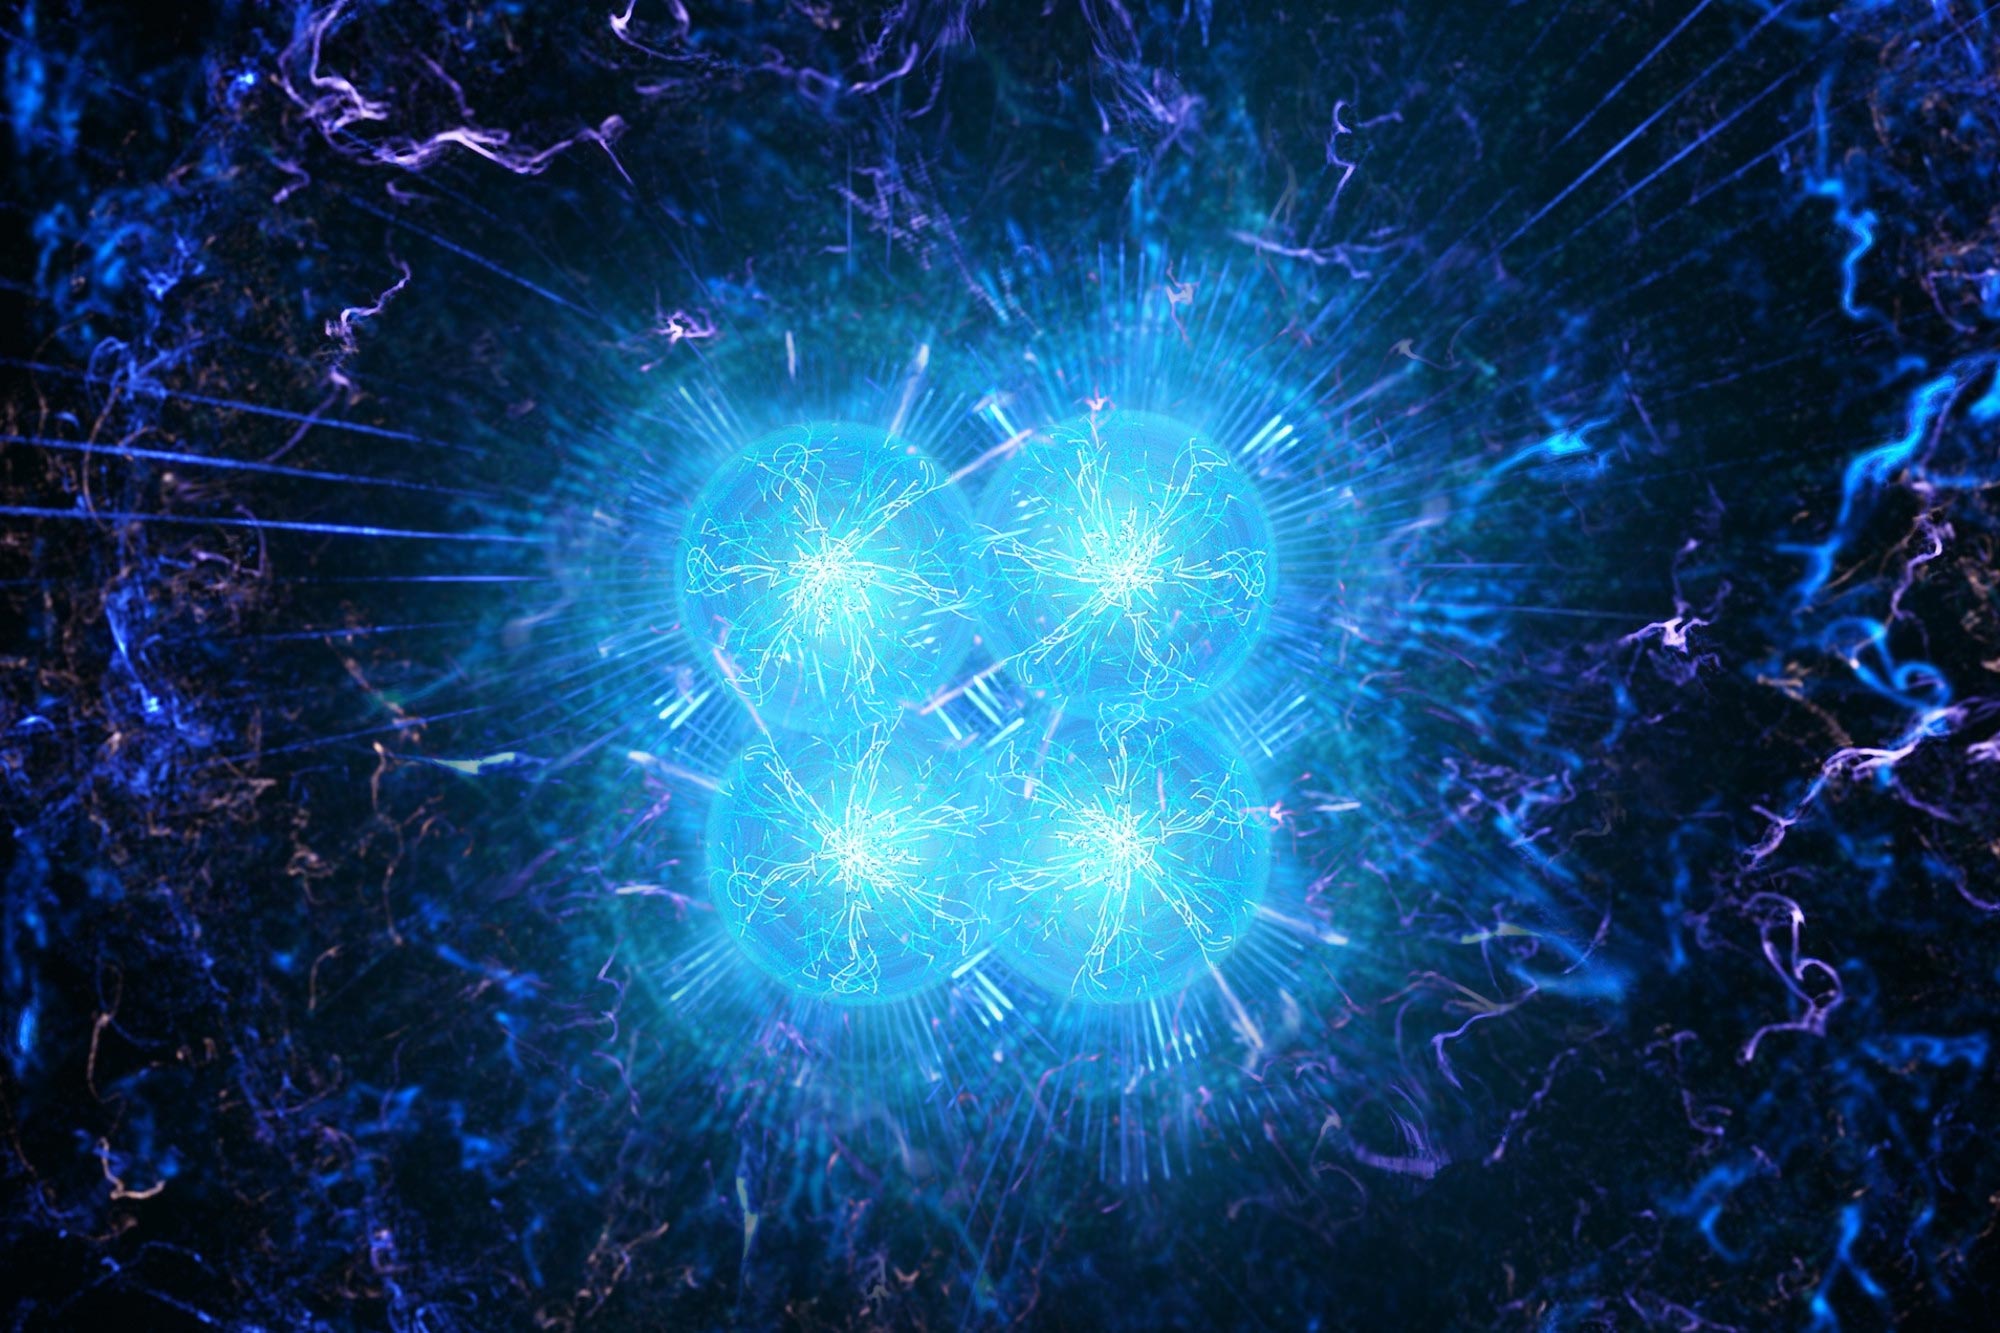 Penemuan eksperimental tetraneutron – keadaan materi yang eksotis